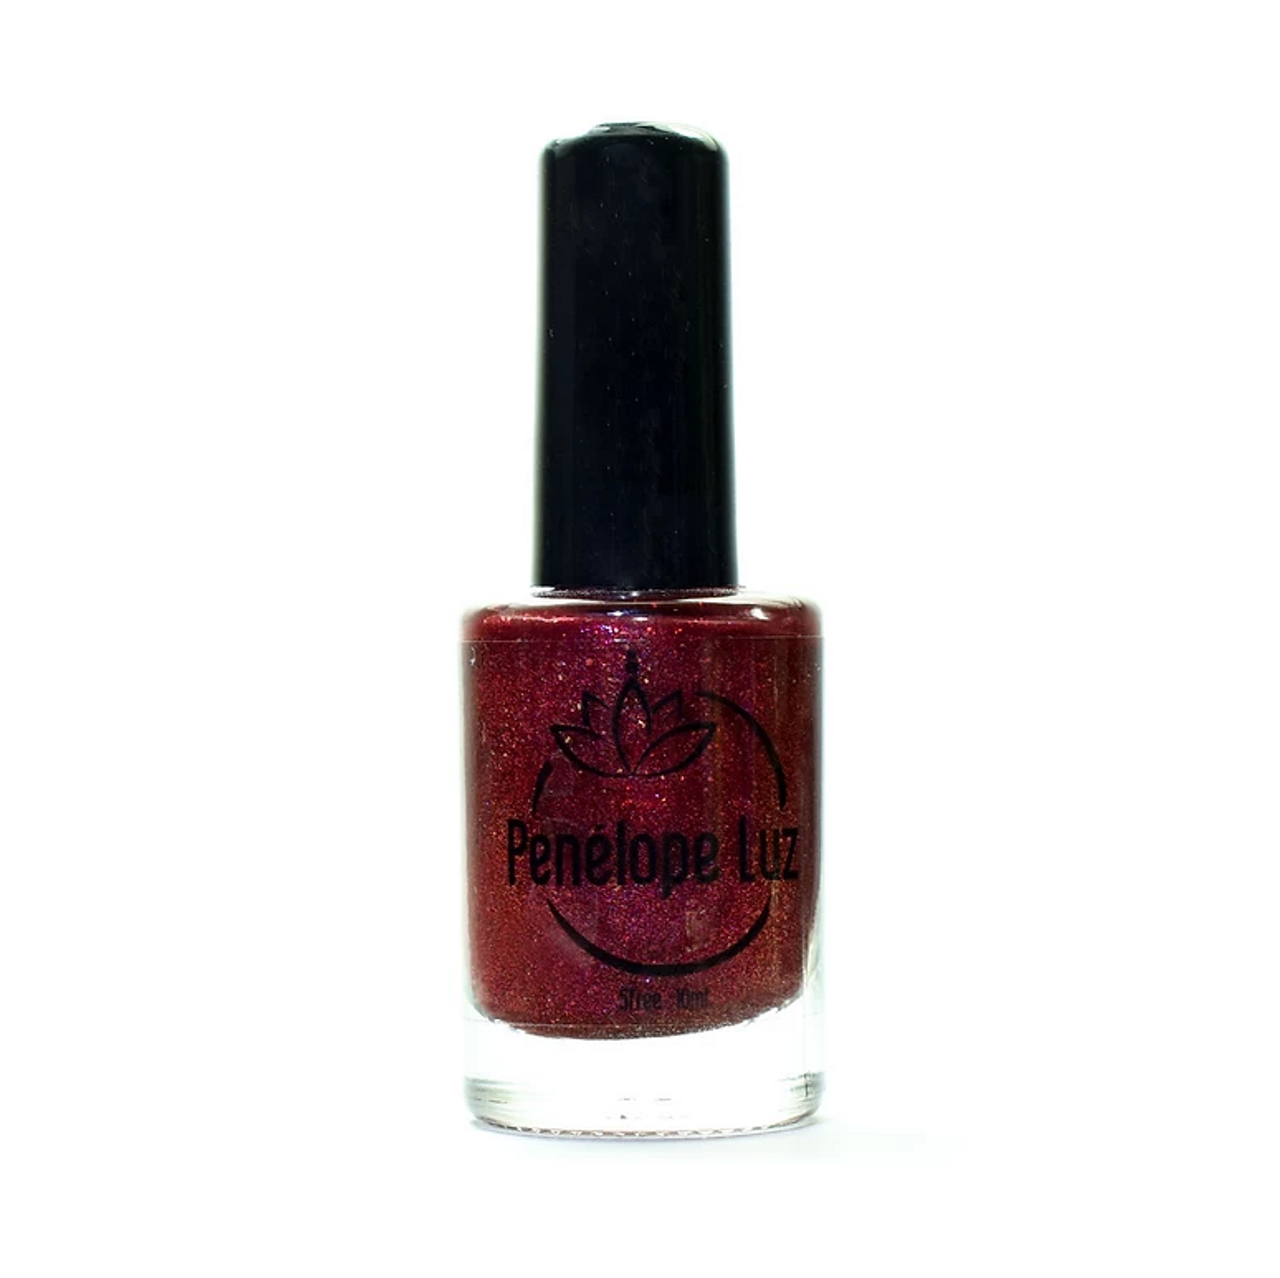 Freya Penelope Luz nail polish. Available at www.lanternandwren.com.